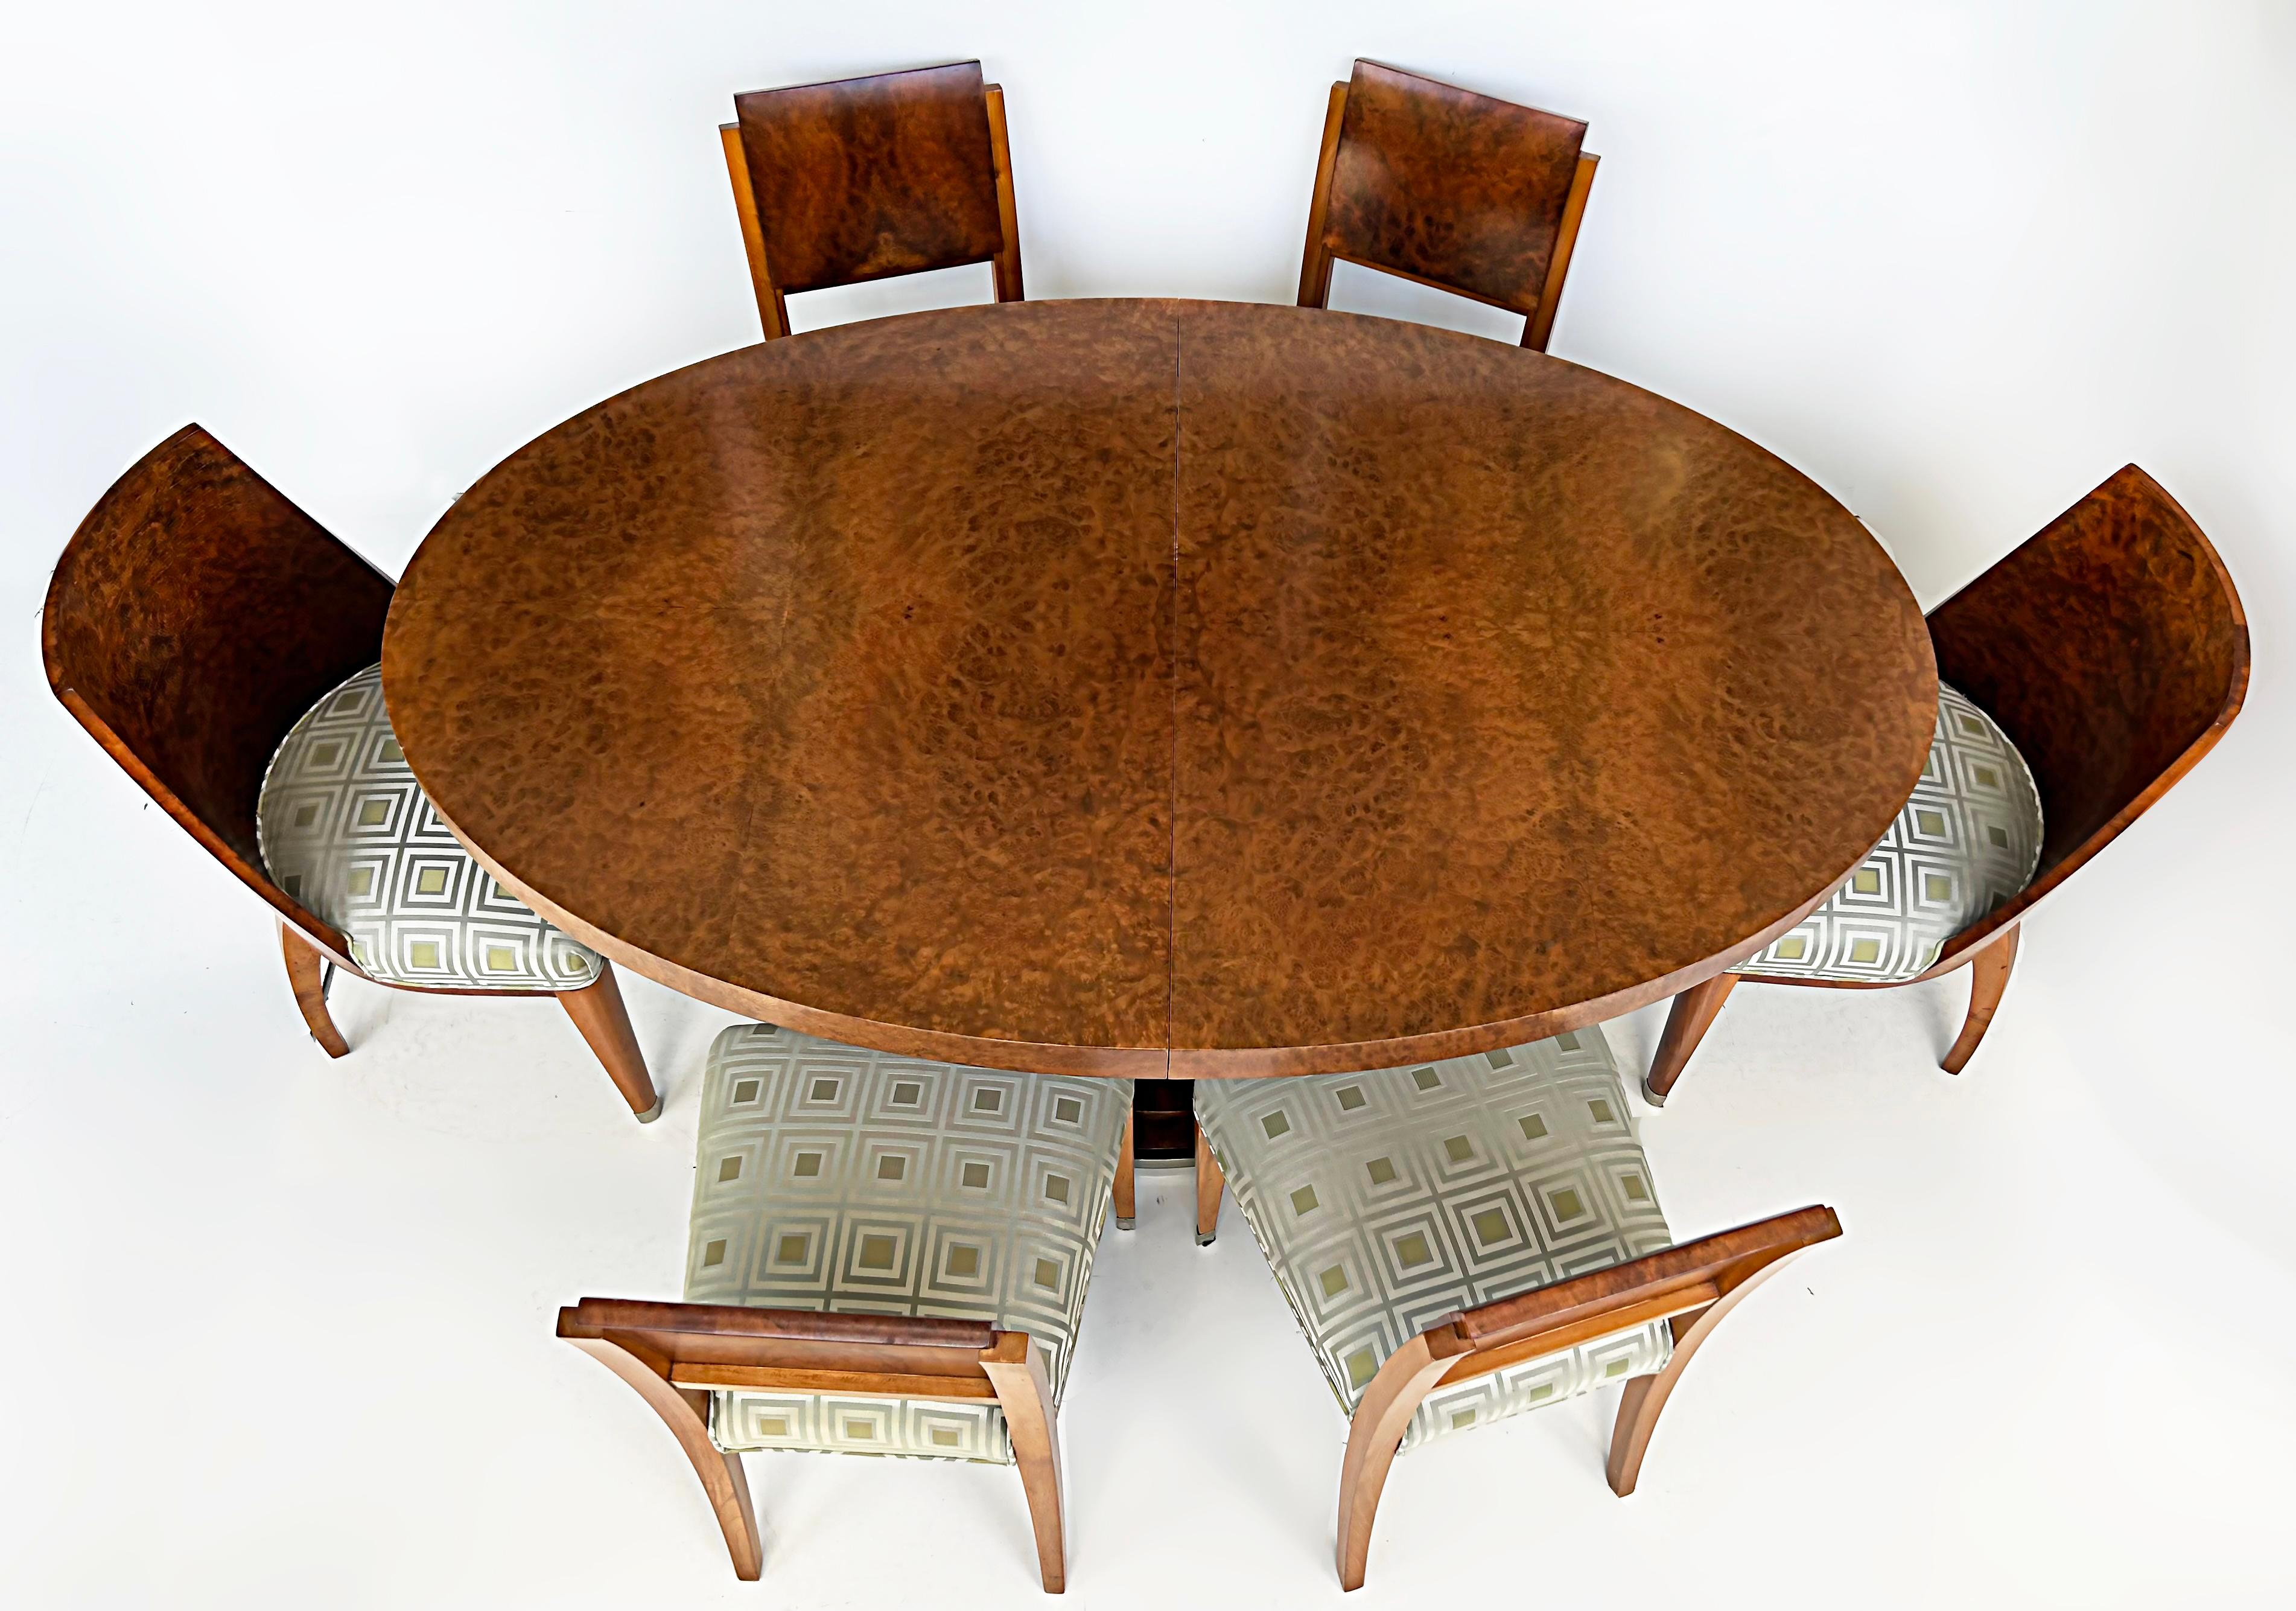 Metal French Art Deco Rinck Paris Burlwood Dining Table 1930s, Extending Oval Pedestal For Sale